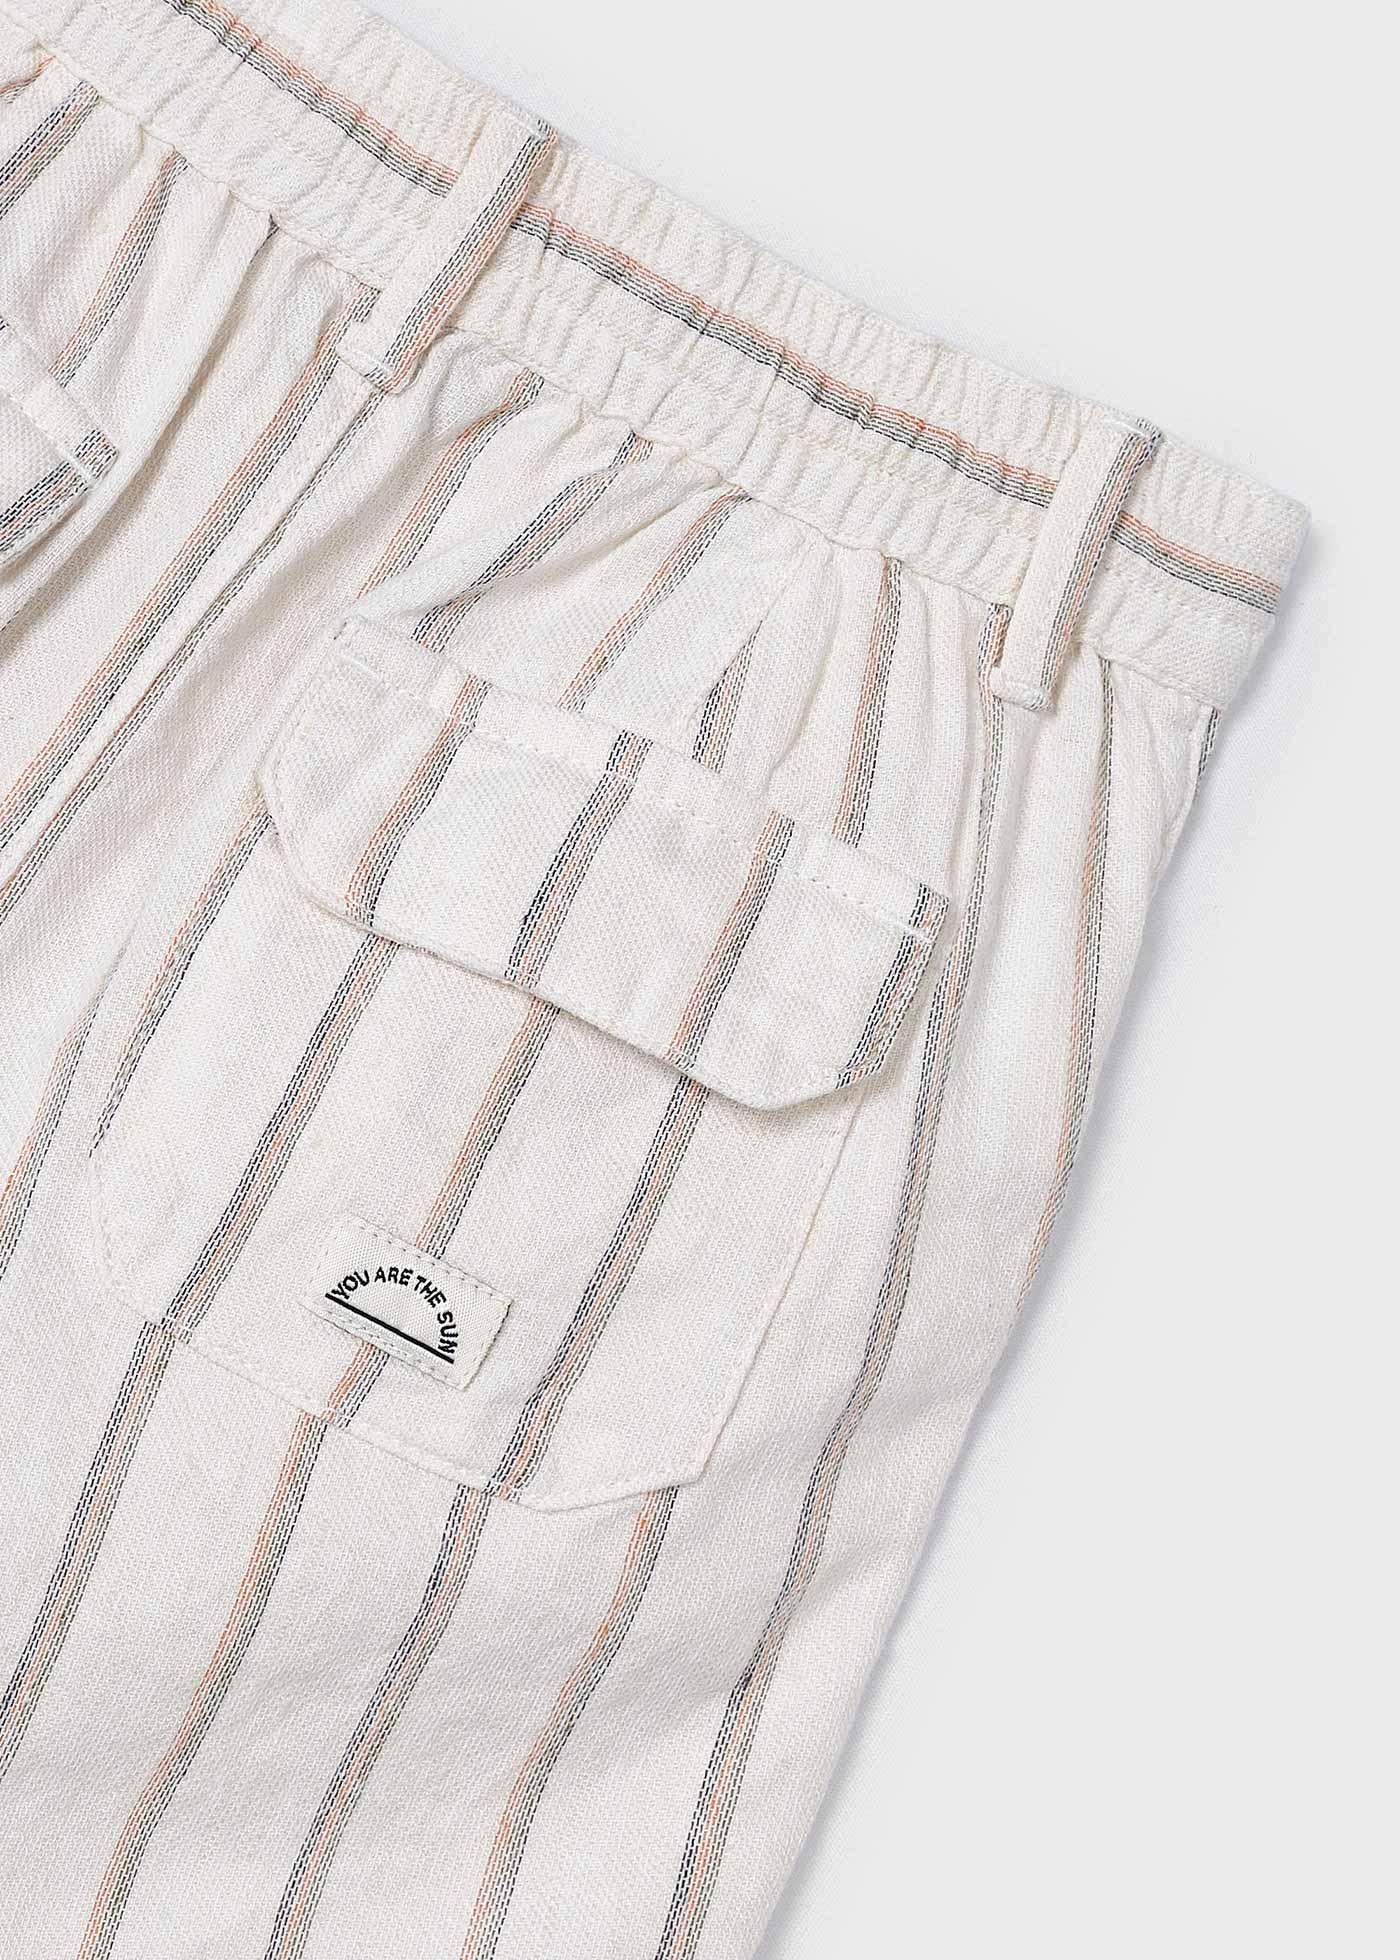 Boy Bermuda Striped Linen Shorts